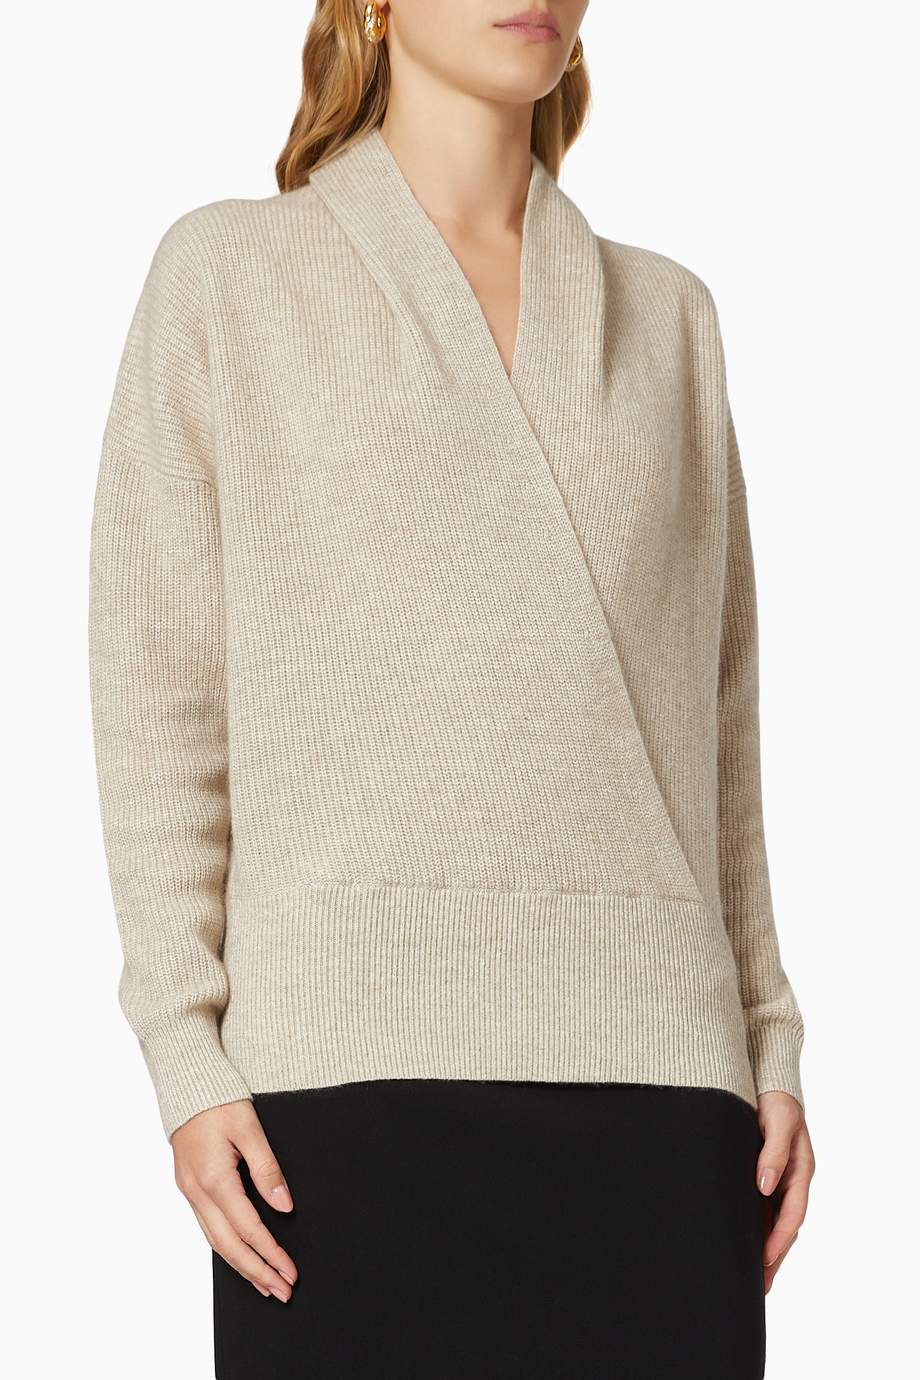 Shop Michael Kors Brown Shaker Wrap Sweater in Cashmere & Linen 